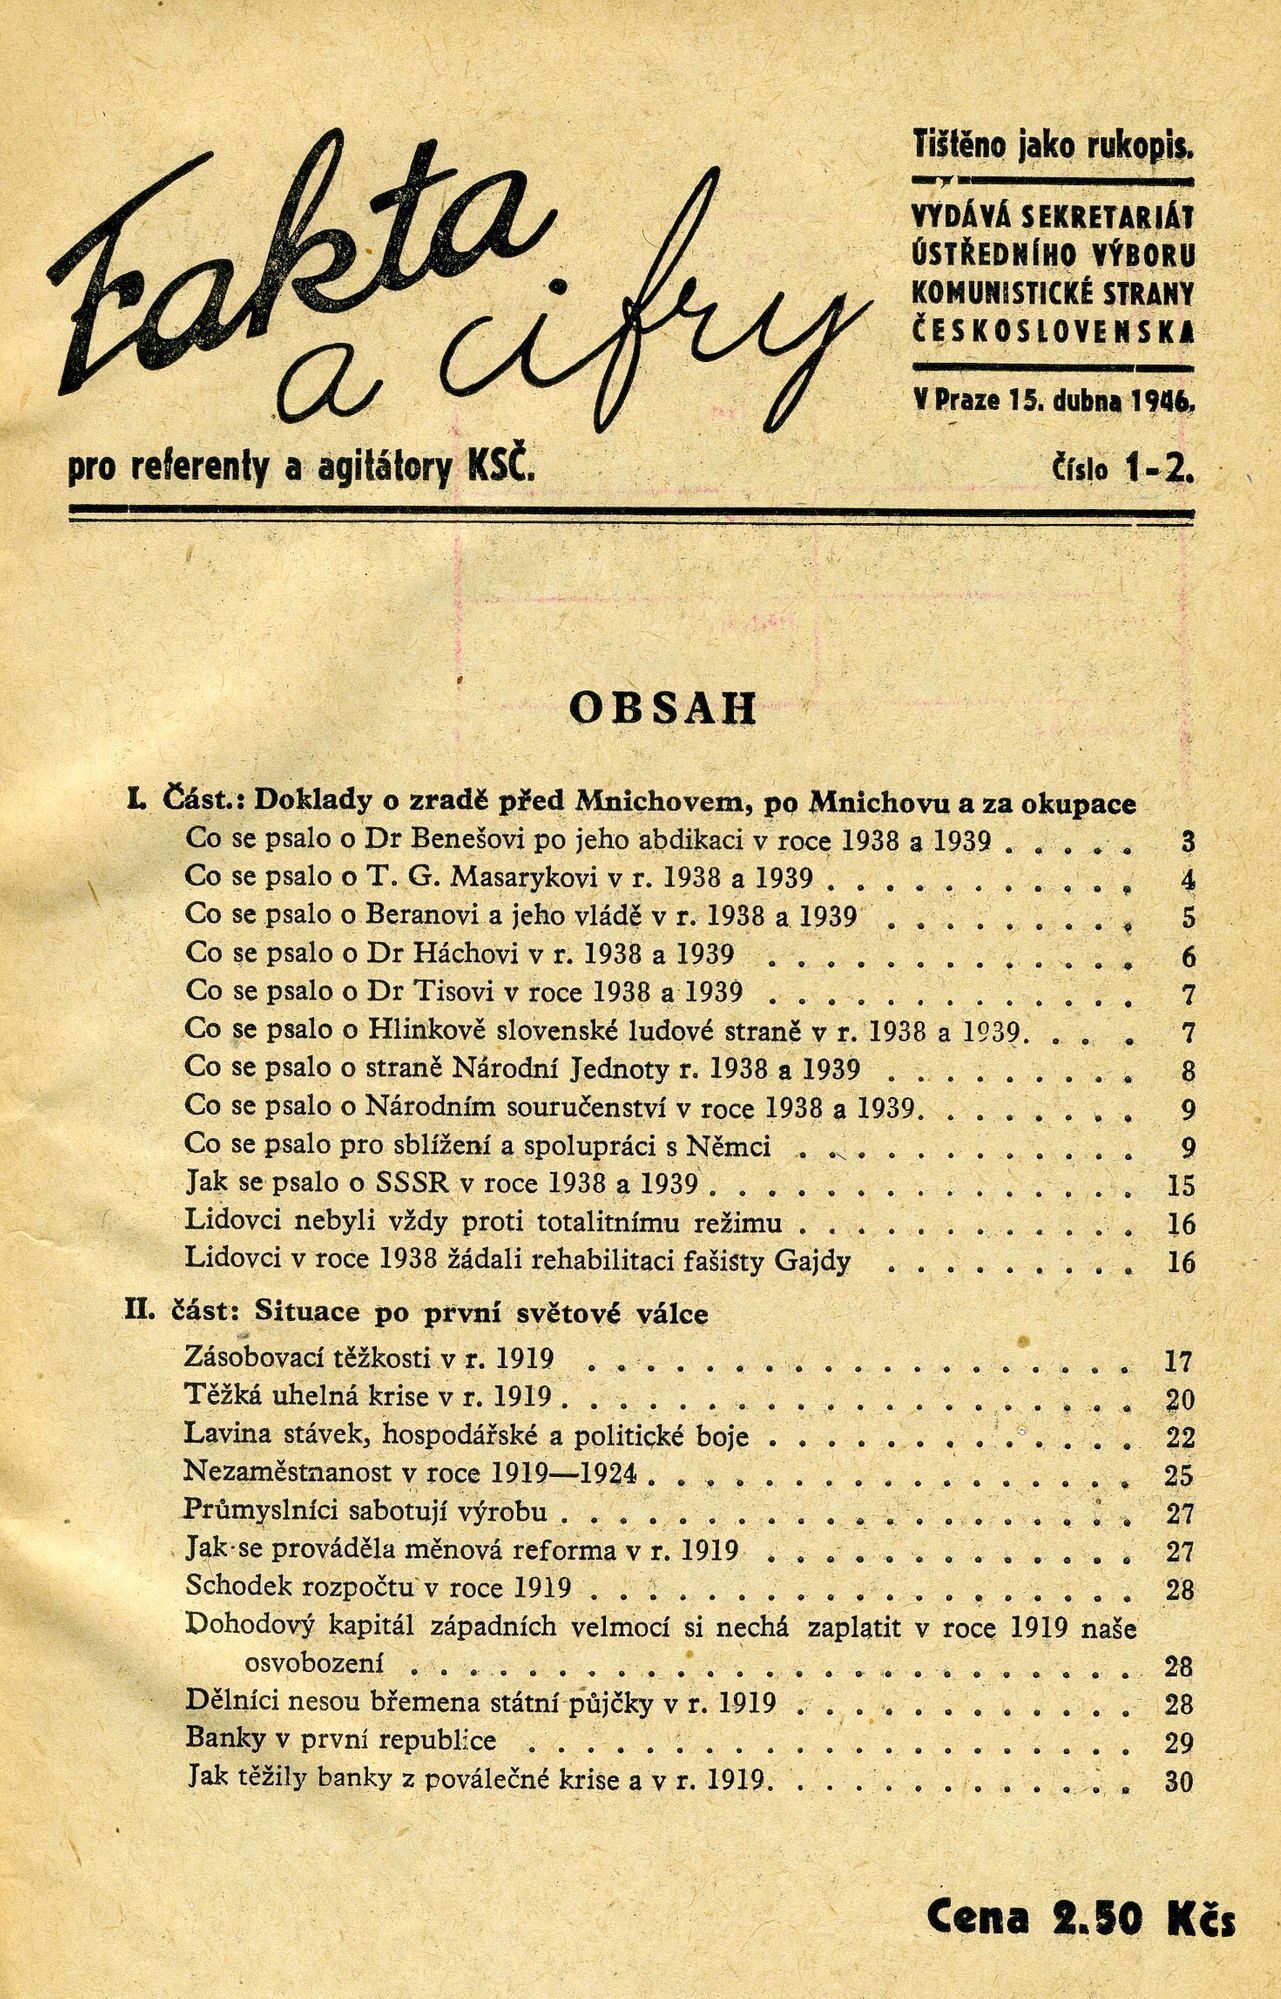 Publikace Fakta a Cifry z roku 1946